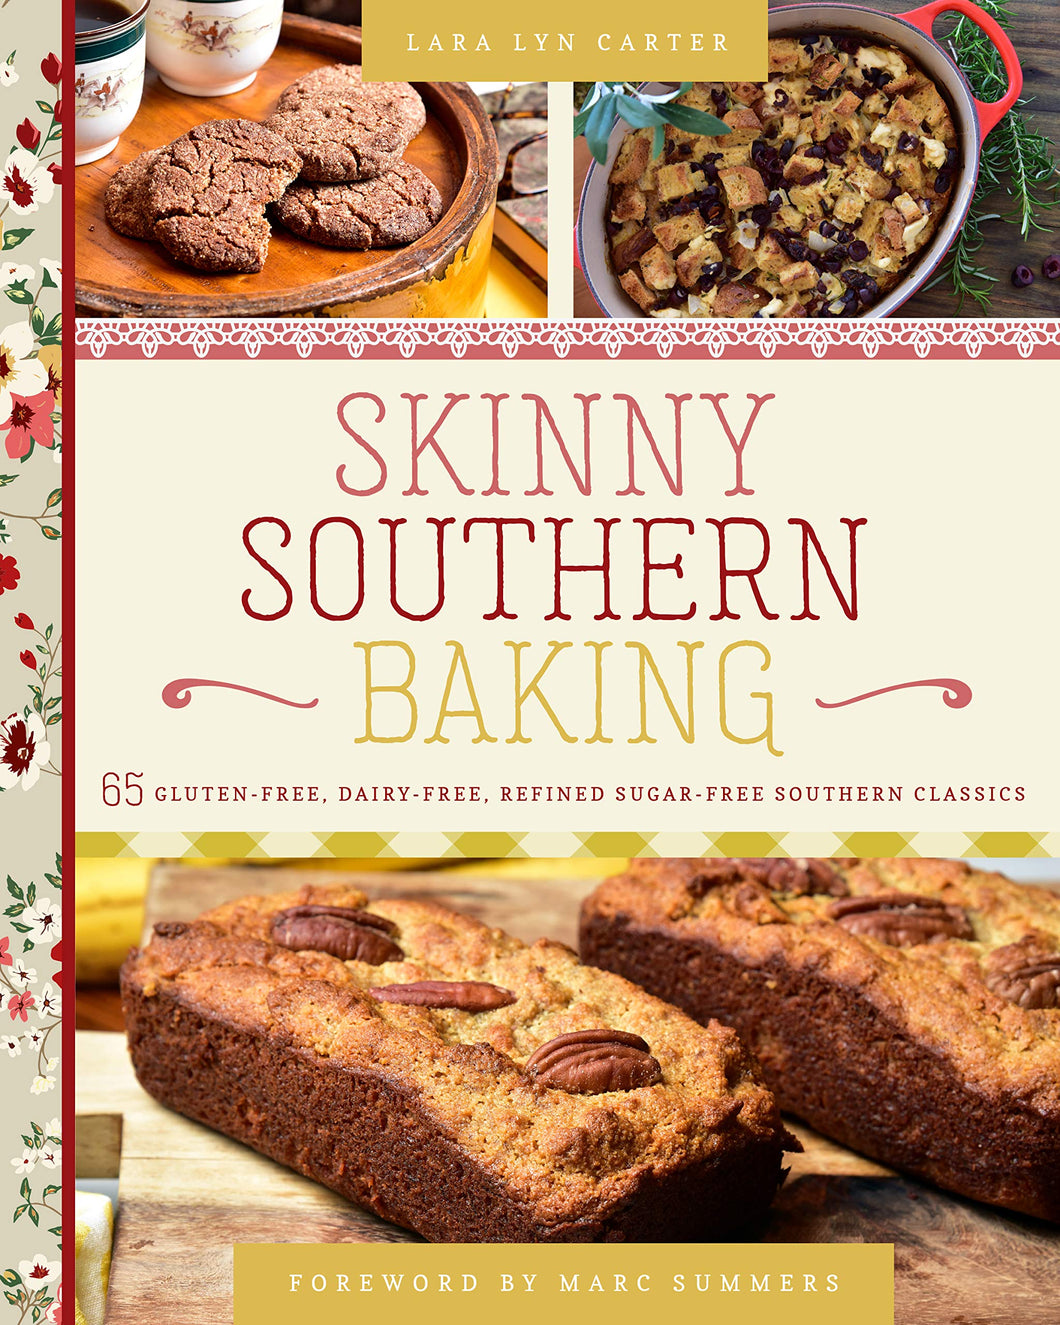 Skinny Southern Baking: 65 Gluten-Free, Dairy-Free, Refined Sugar-Free Southern Classics